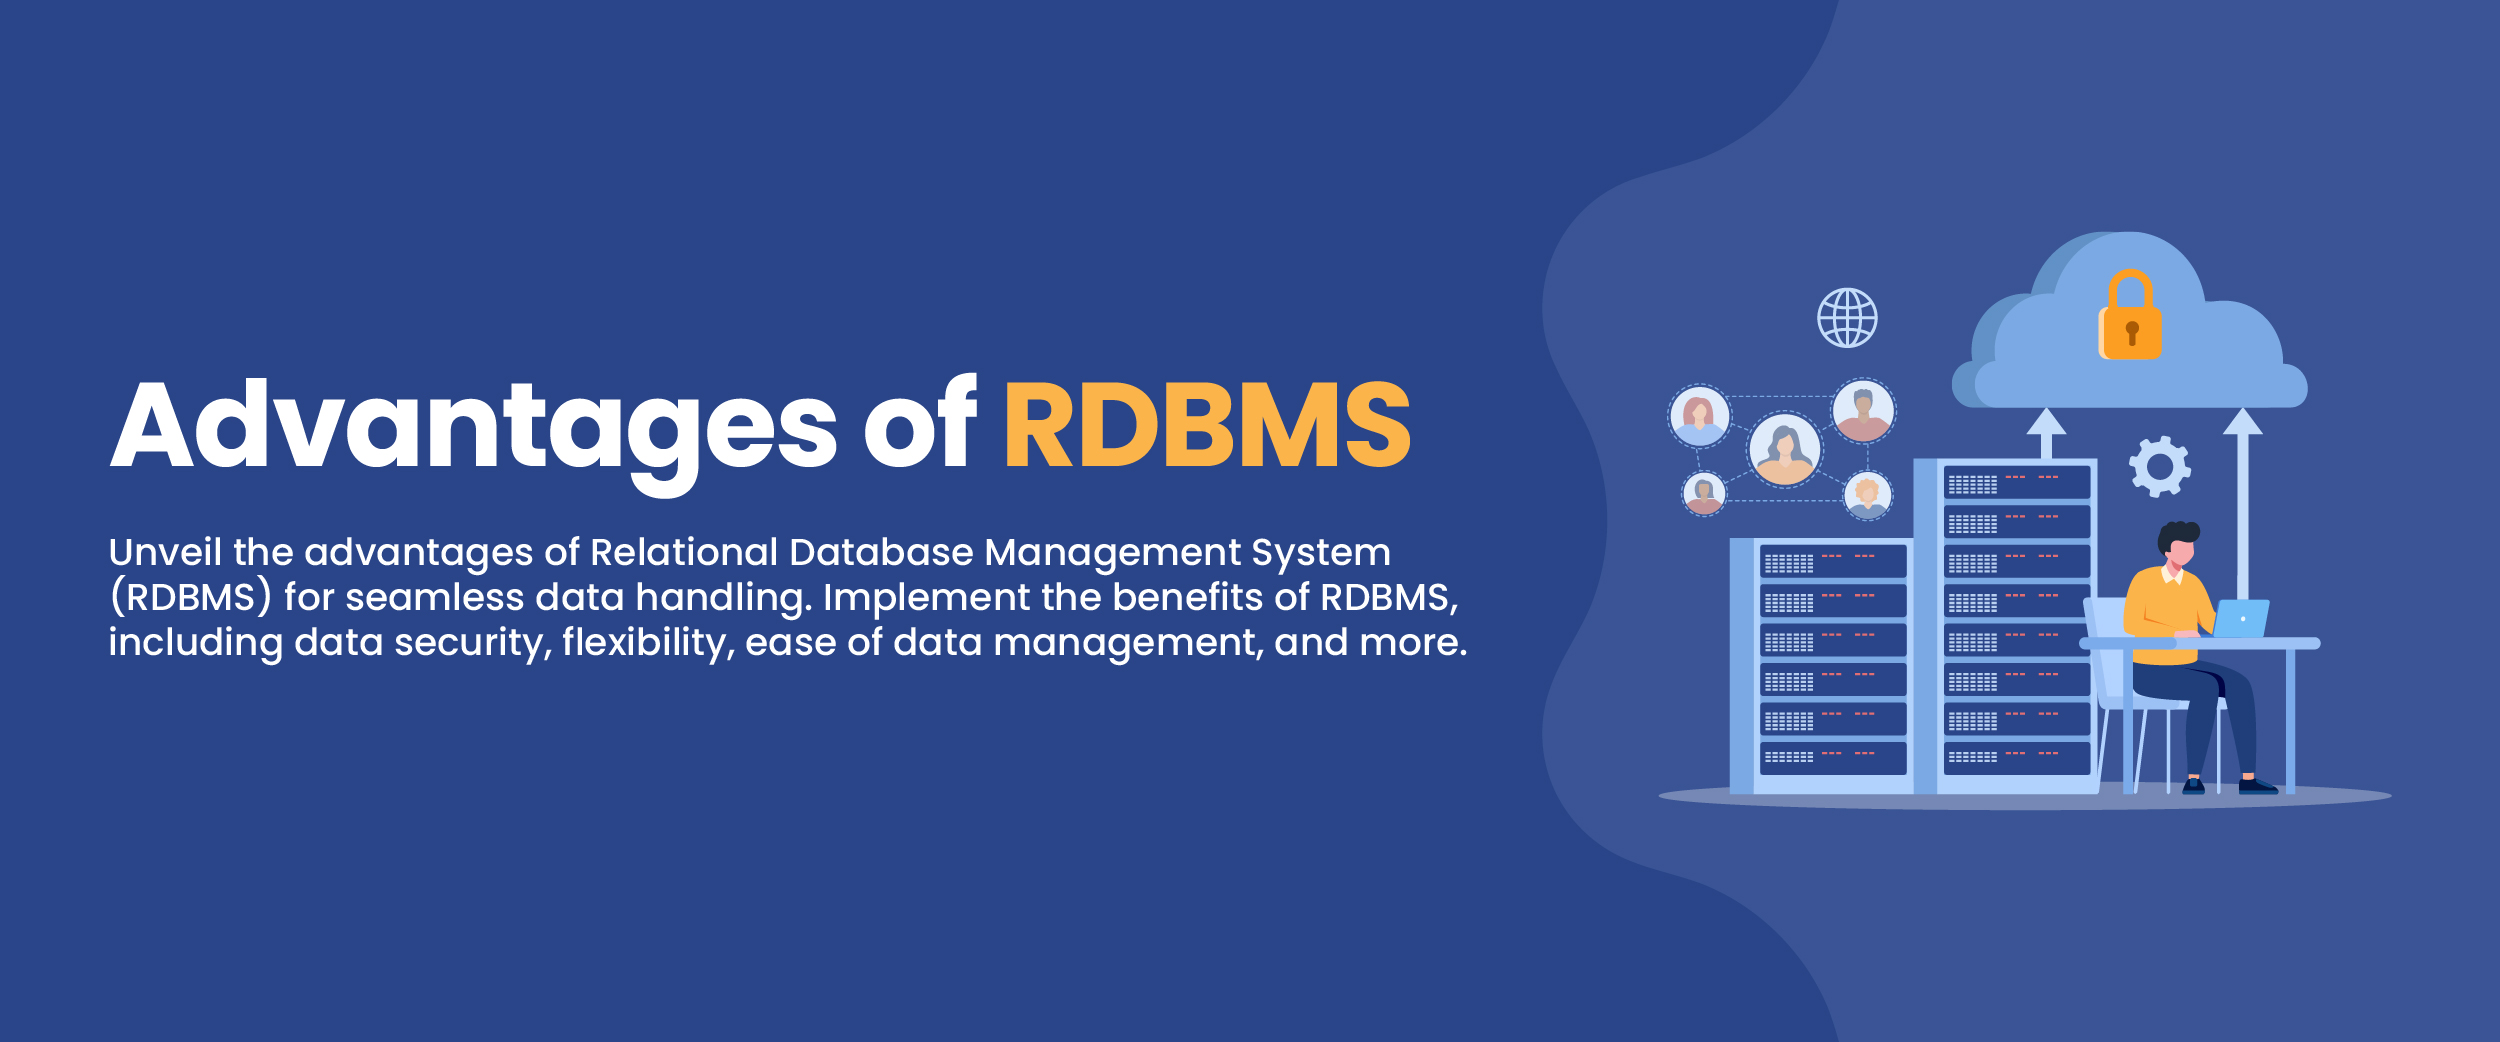 Advantages of RDBMS